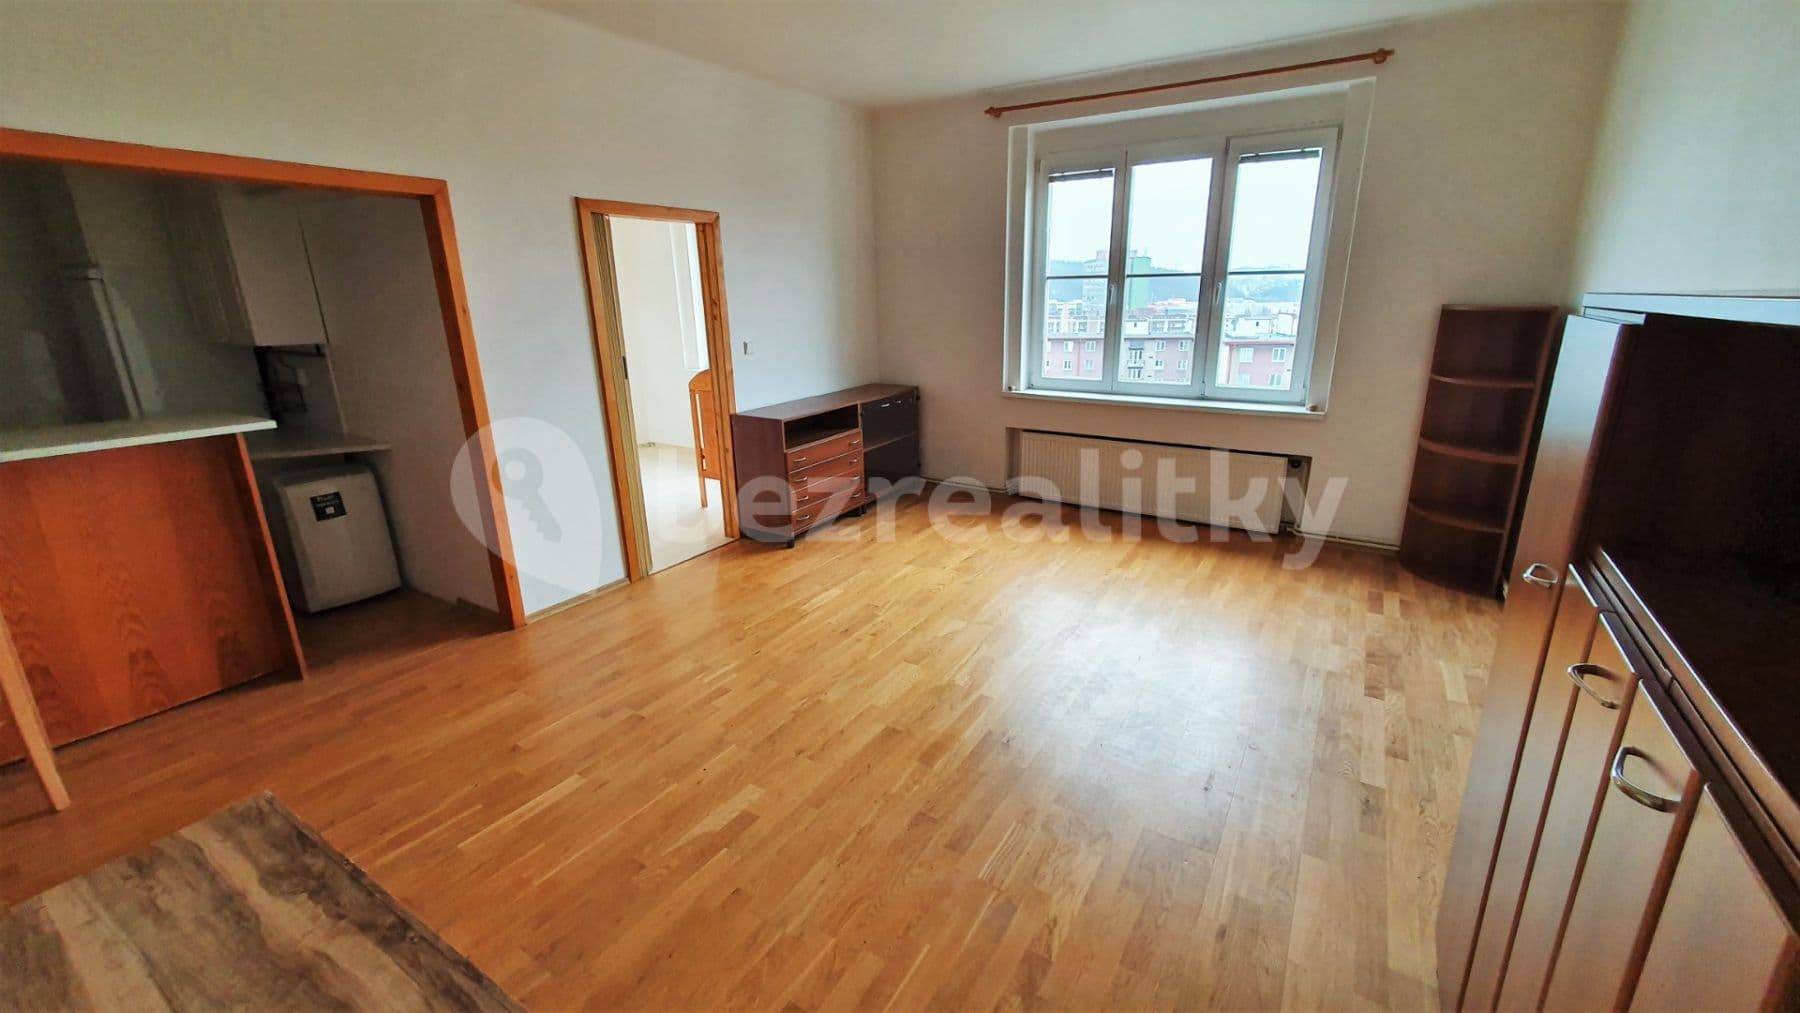 1 bedroom with open-plan kitchen flat to rent, 47 m², Kodaňská, Prague, Prague